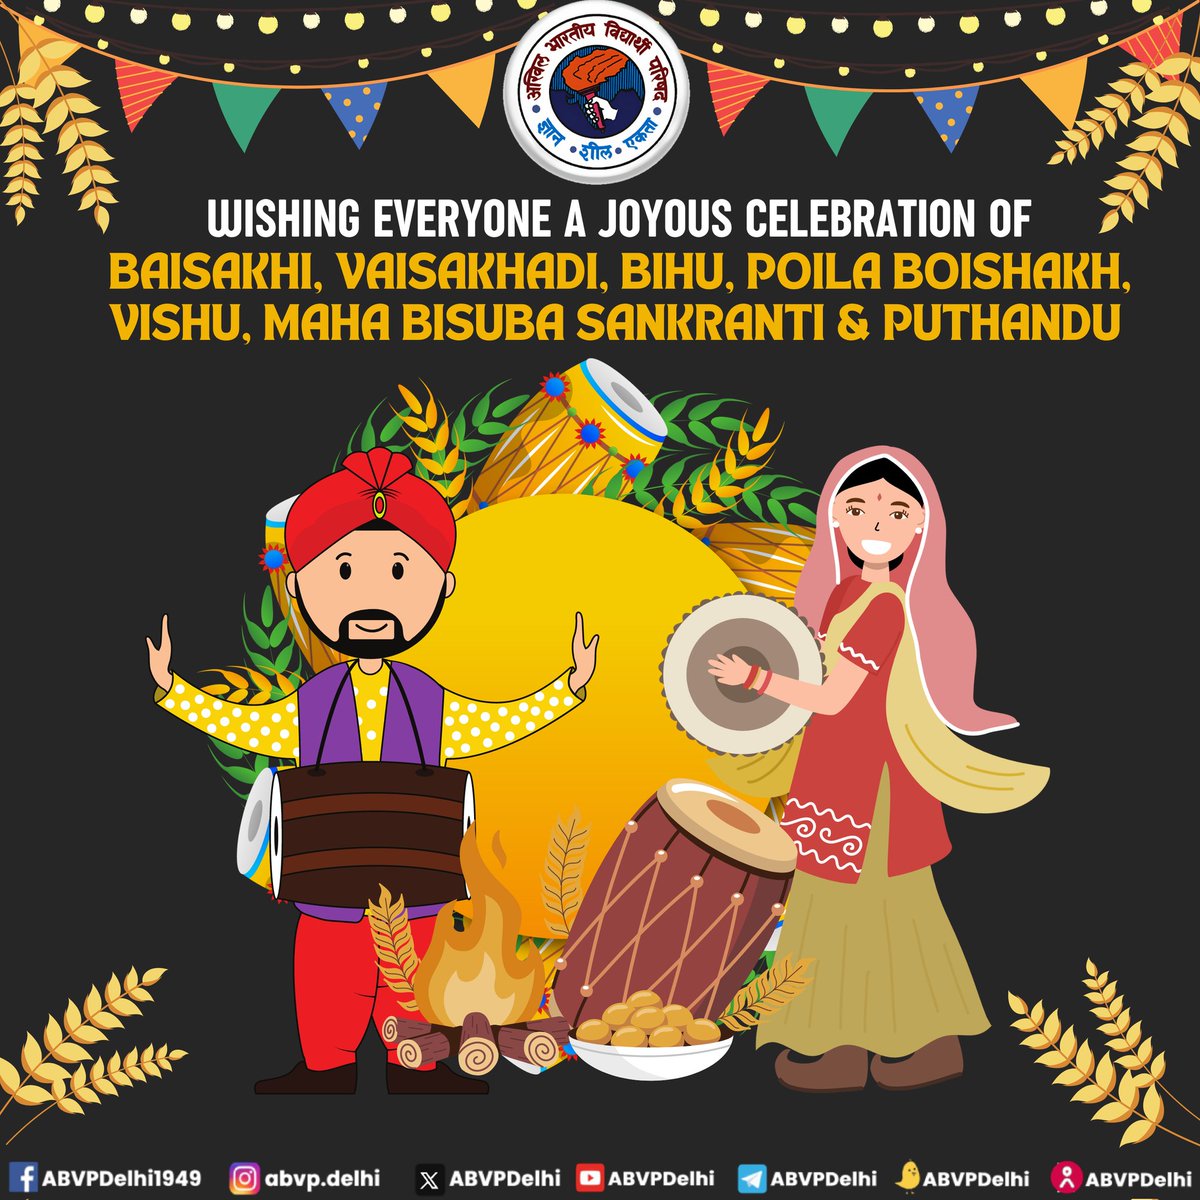 Wishing everyone a joyous celebration of Baisakhi, Vaisakhadi, Bihu, Poila Boishakh, Vishu, Maha Bisuba Sankranti & Puthandu! 

May these festivals fill your lives with harmony, joy and prosperity.

#Baishakhi #Vaisakhadi #Bihu #PoilaBoishkah #Vishu #Bisuba #Puthandu #Festival